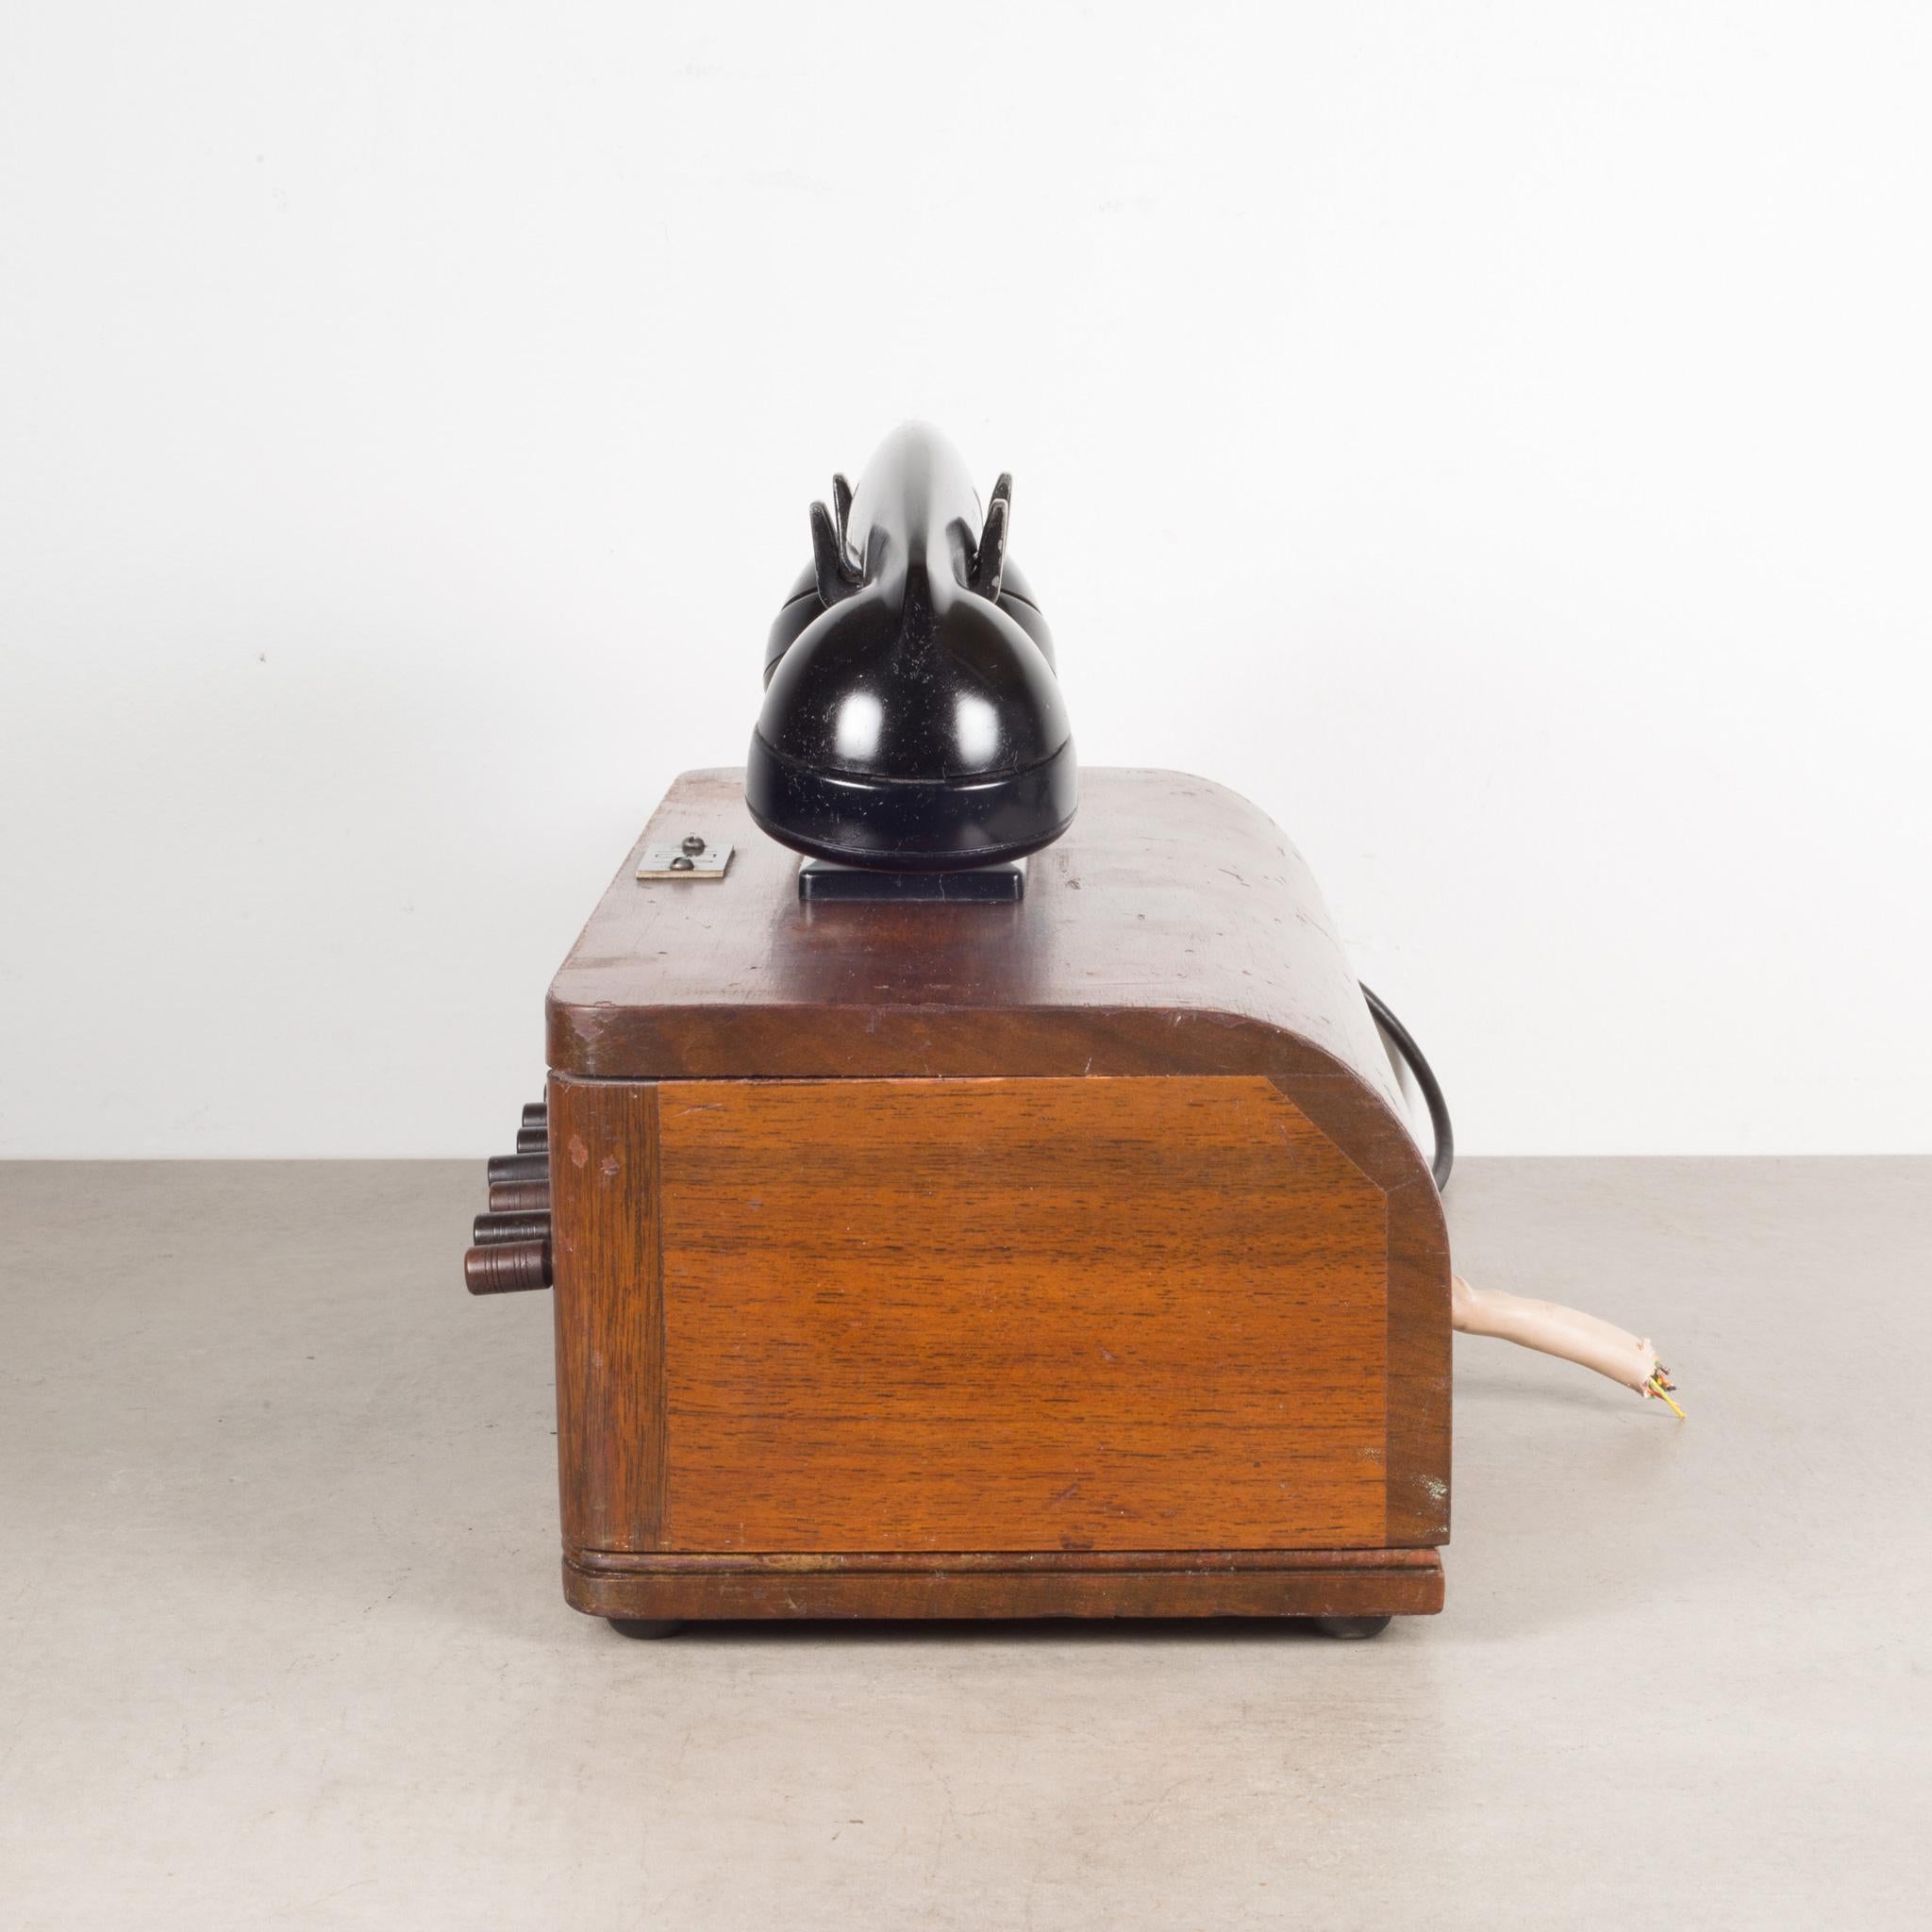 American Antique World War ll Era US Navy Bakelite Switch Board Phone, c.1940